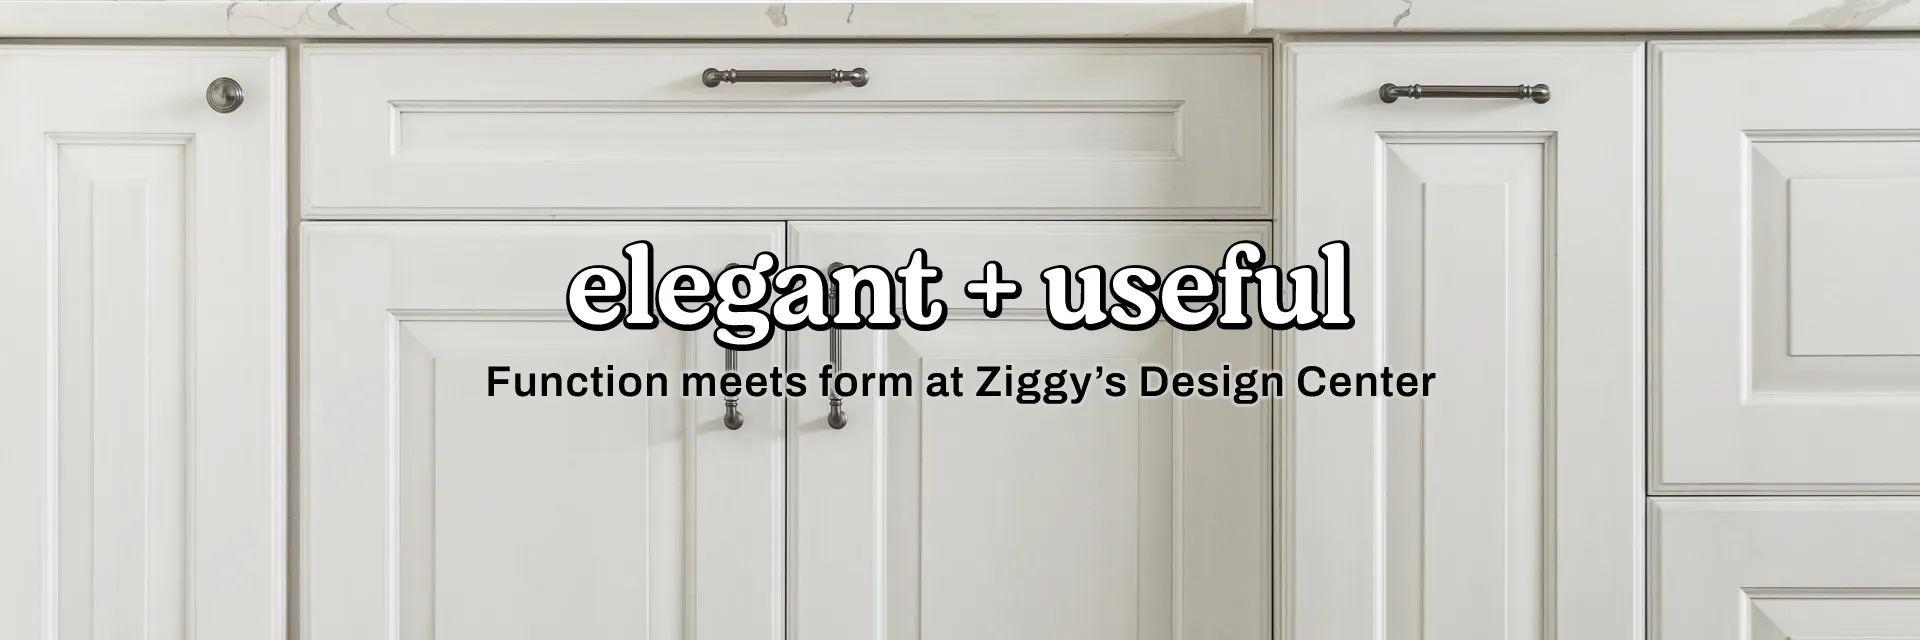 Elegant + useful: Function meets form at Ziggy’s Design Center